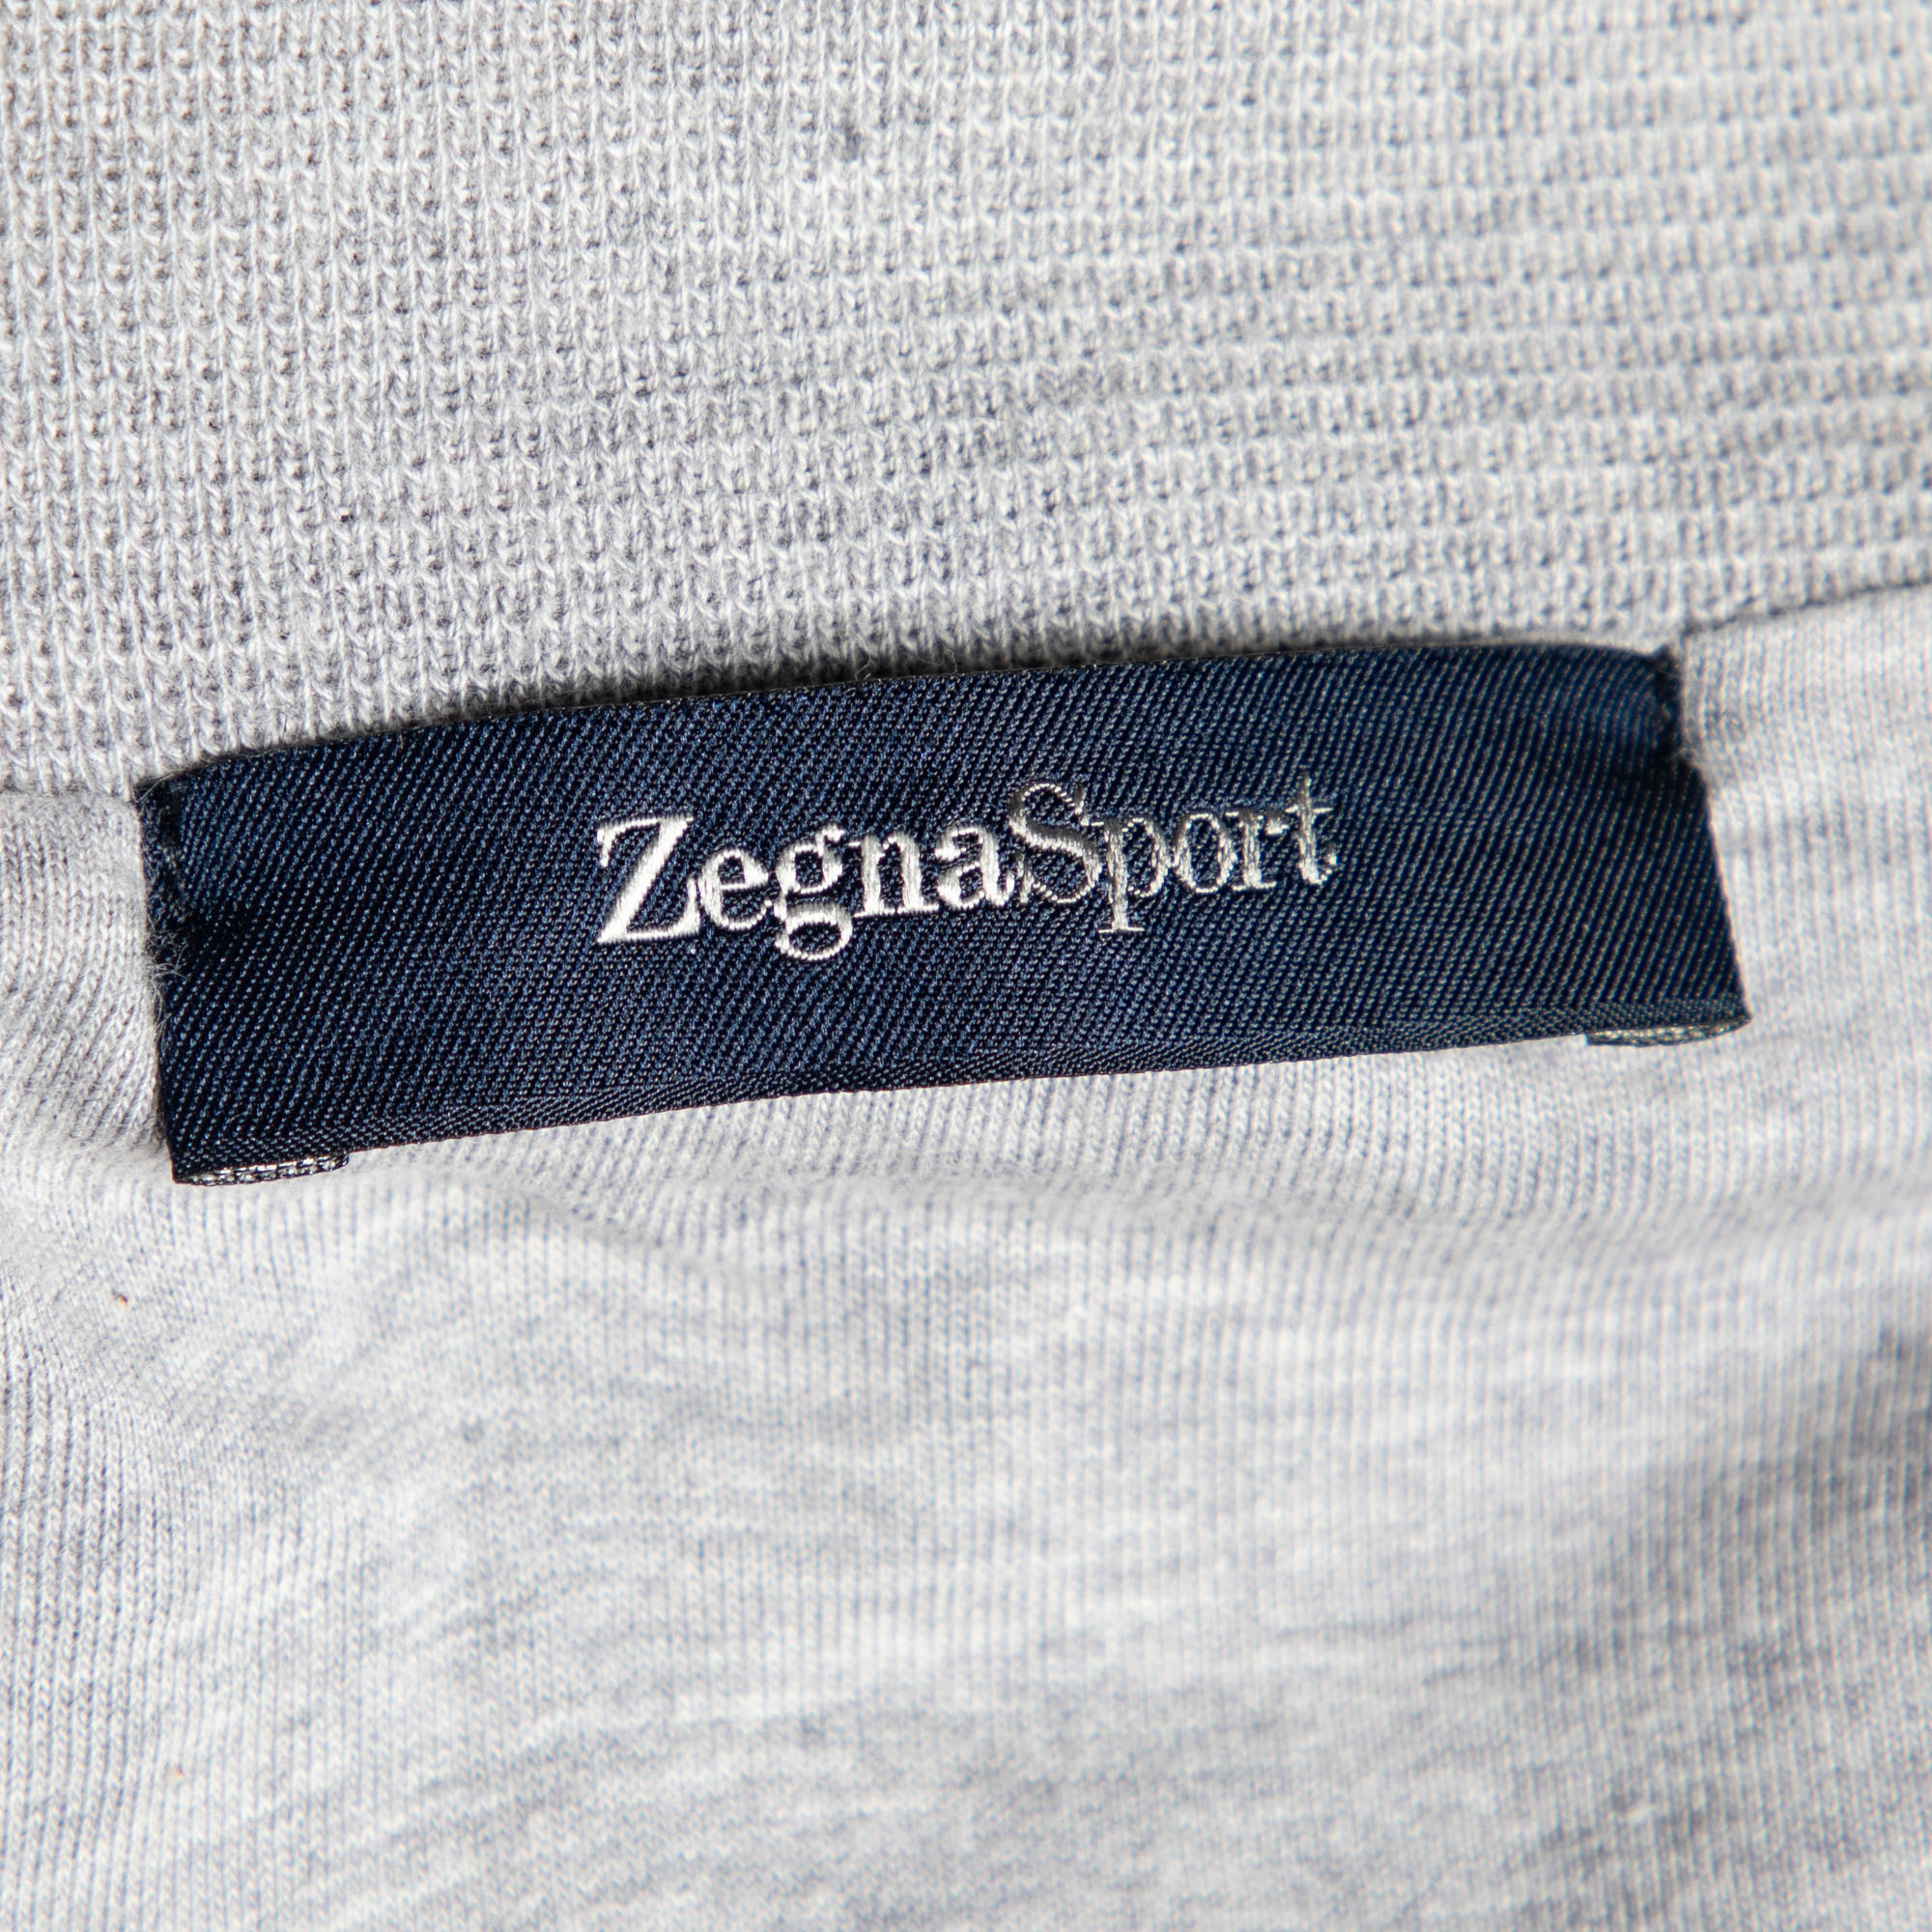 Zegna Sport Grey Striped Cotton Knit Zip Front Jacket XL